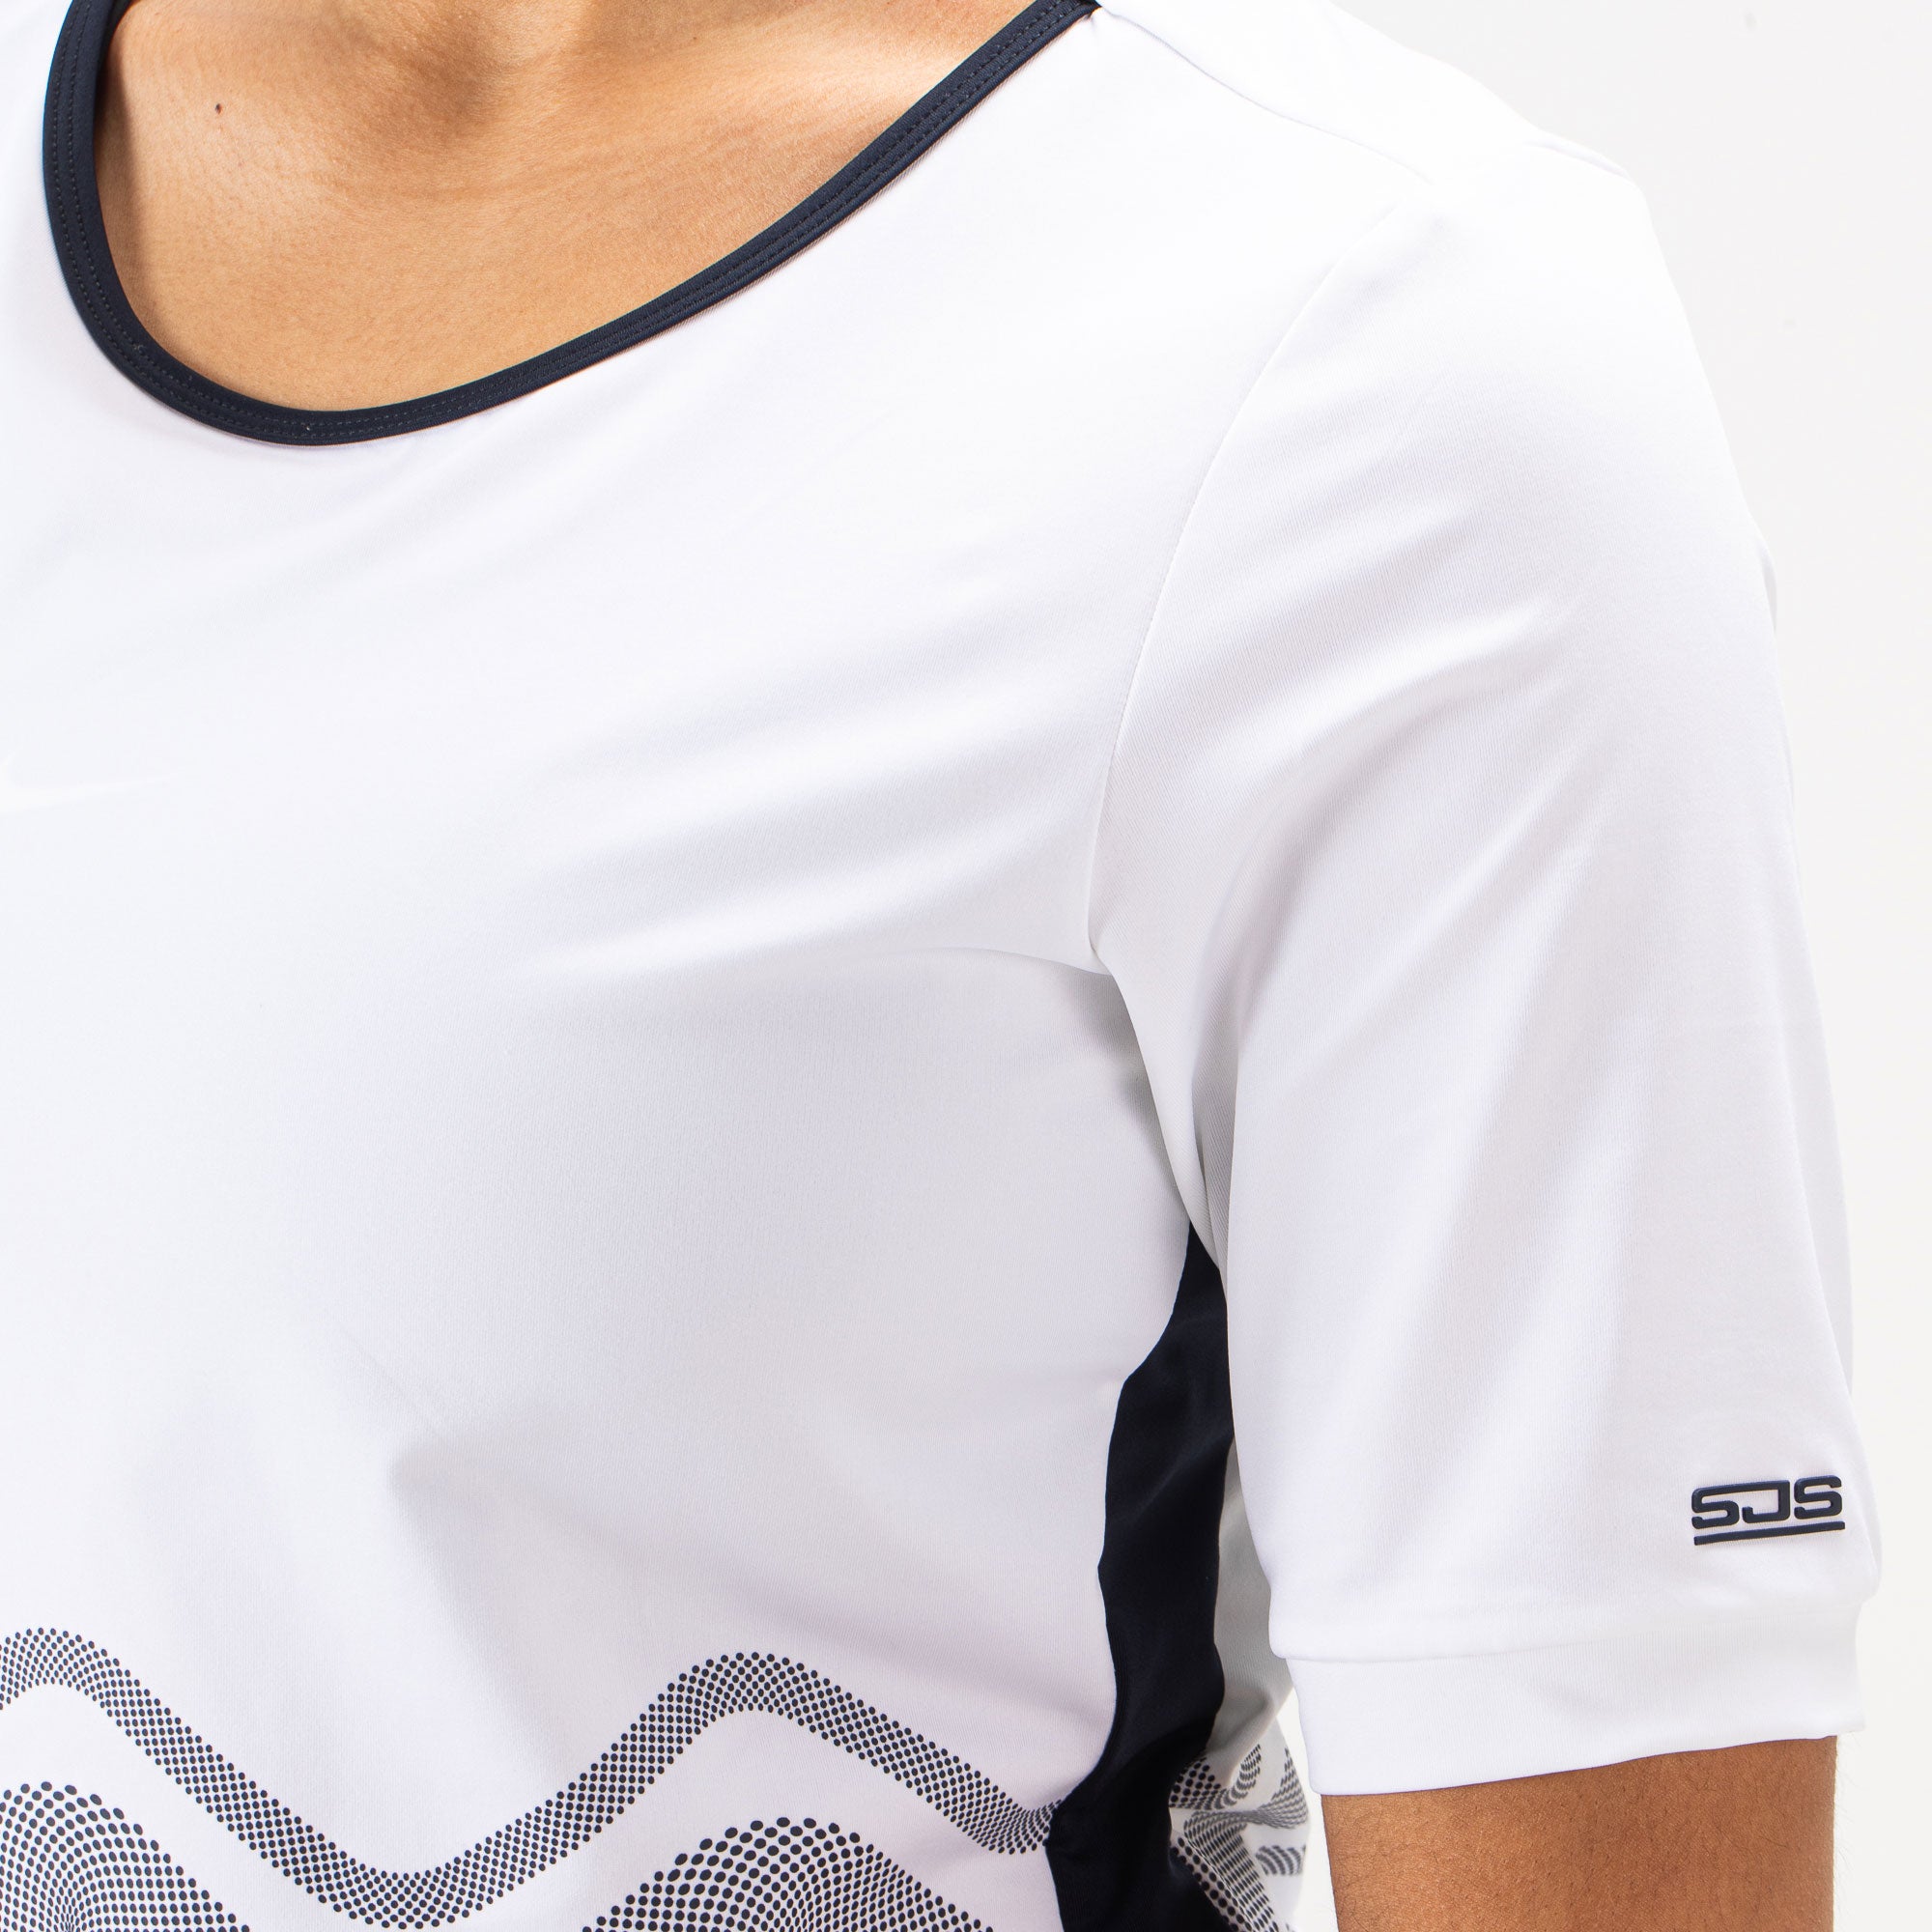 Sjeng Sports Ise Women's Tennis Shirt - White (3)